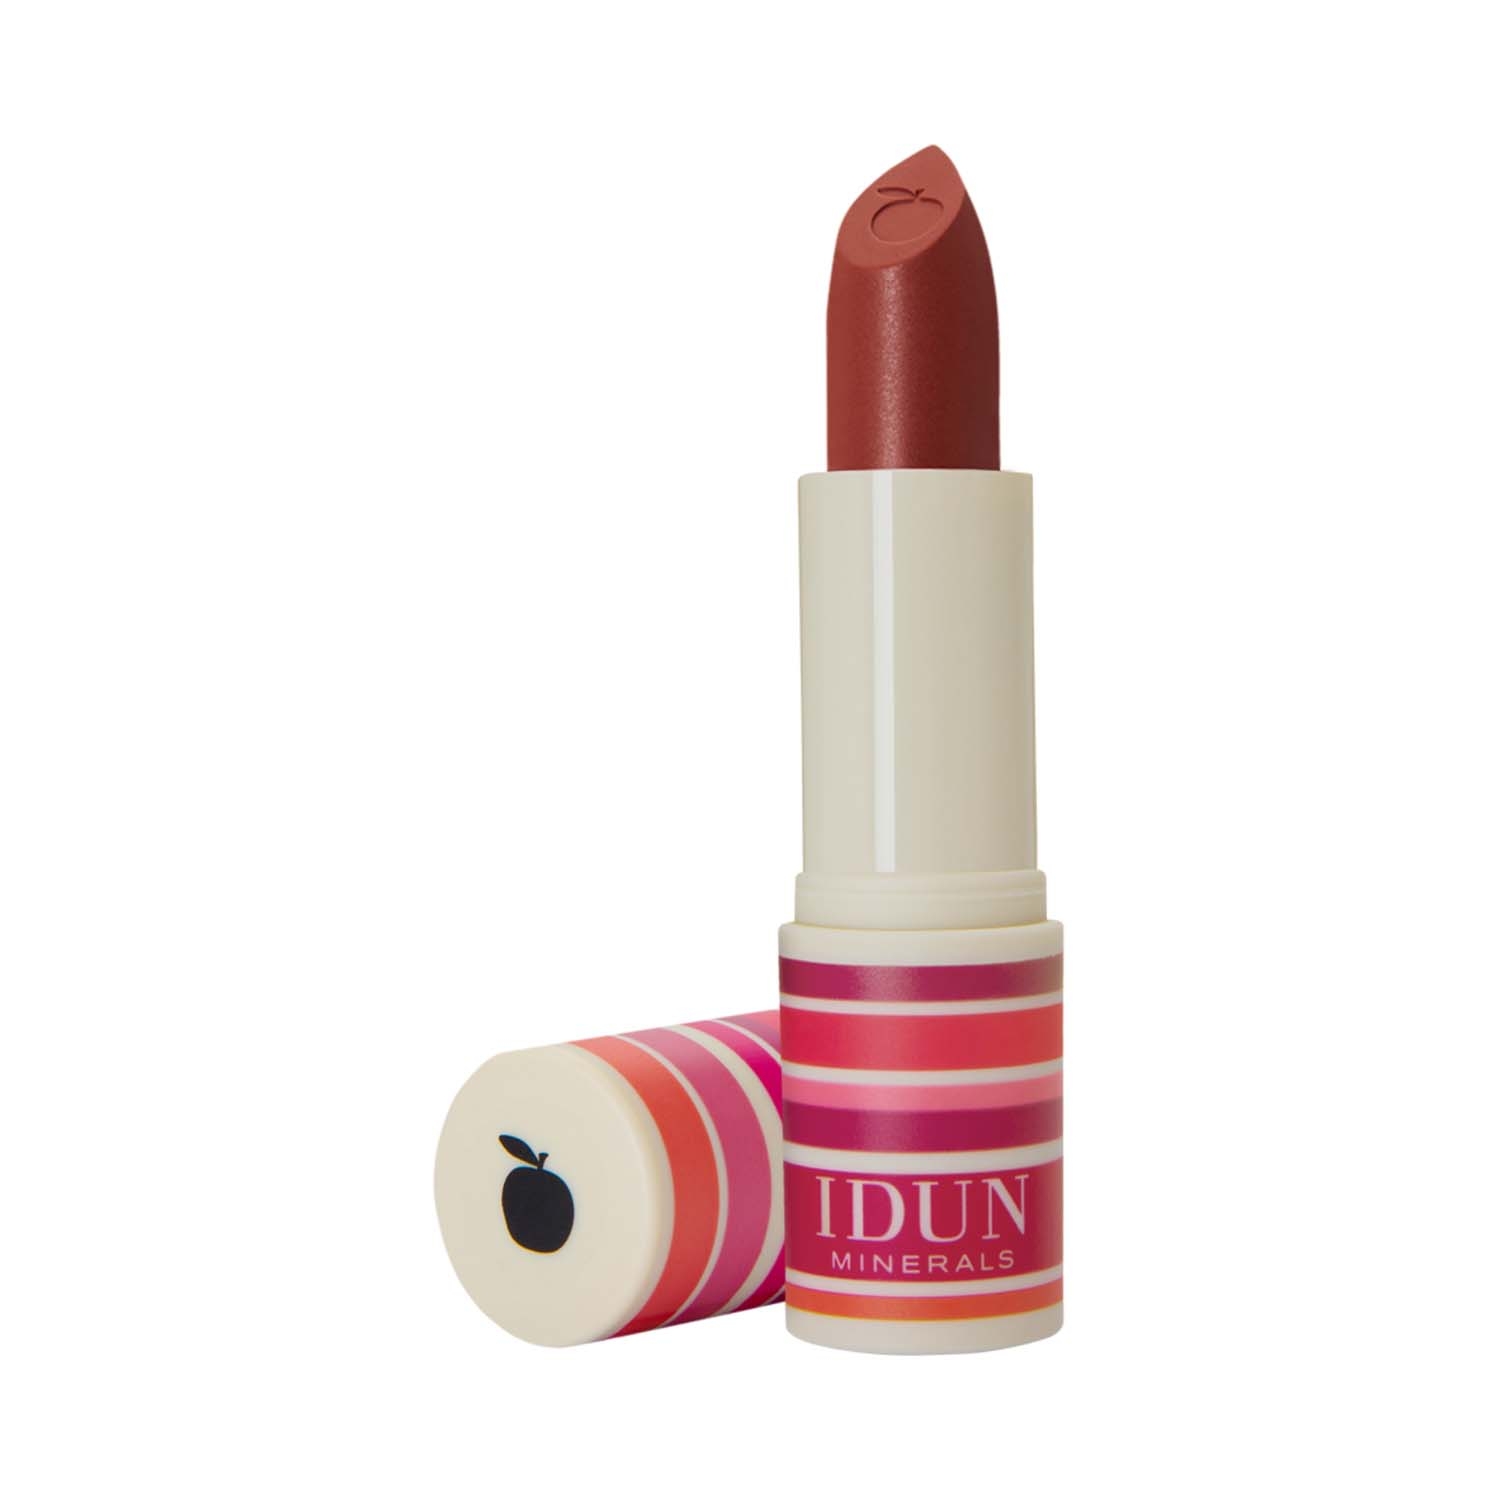 IDUN Minerals | IDUN Minerals Matte Lipstick - Jungfrubär (4g)